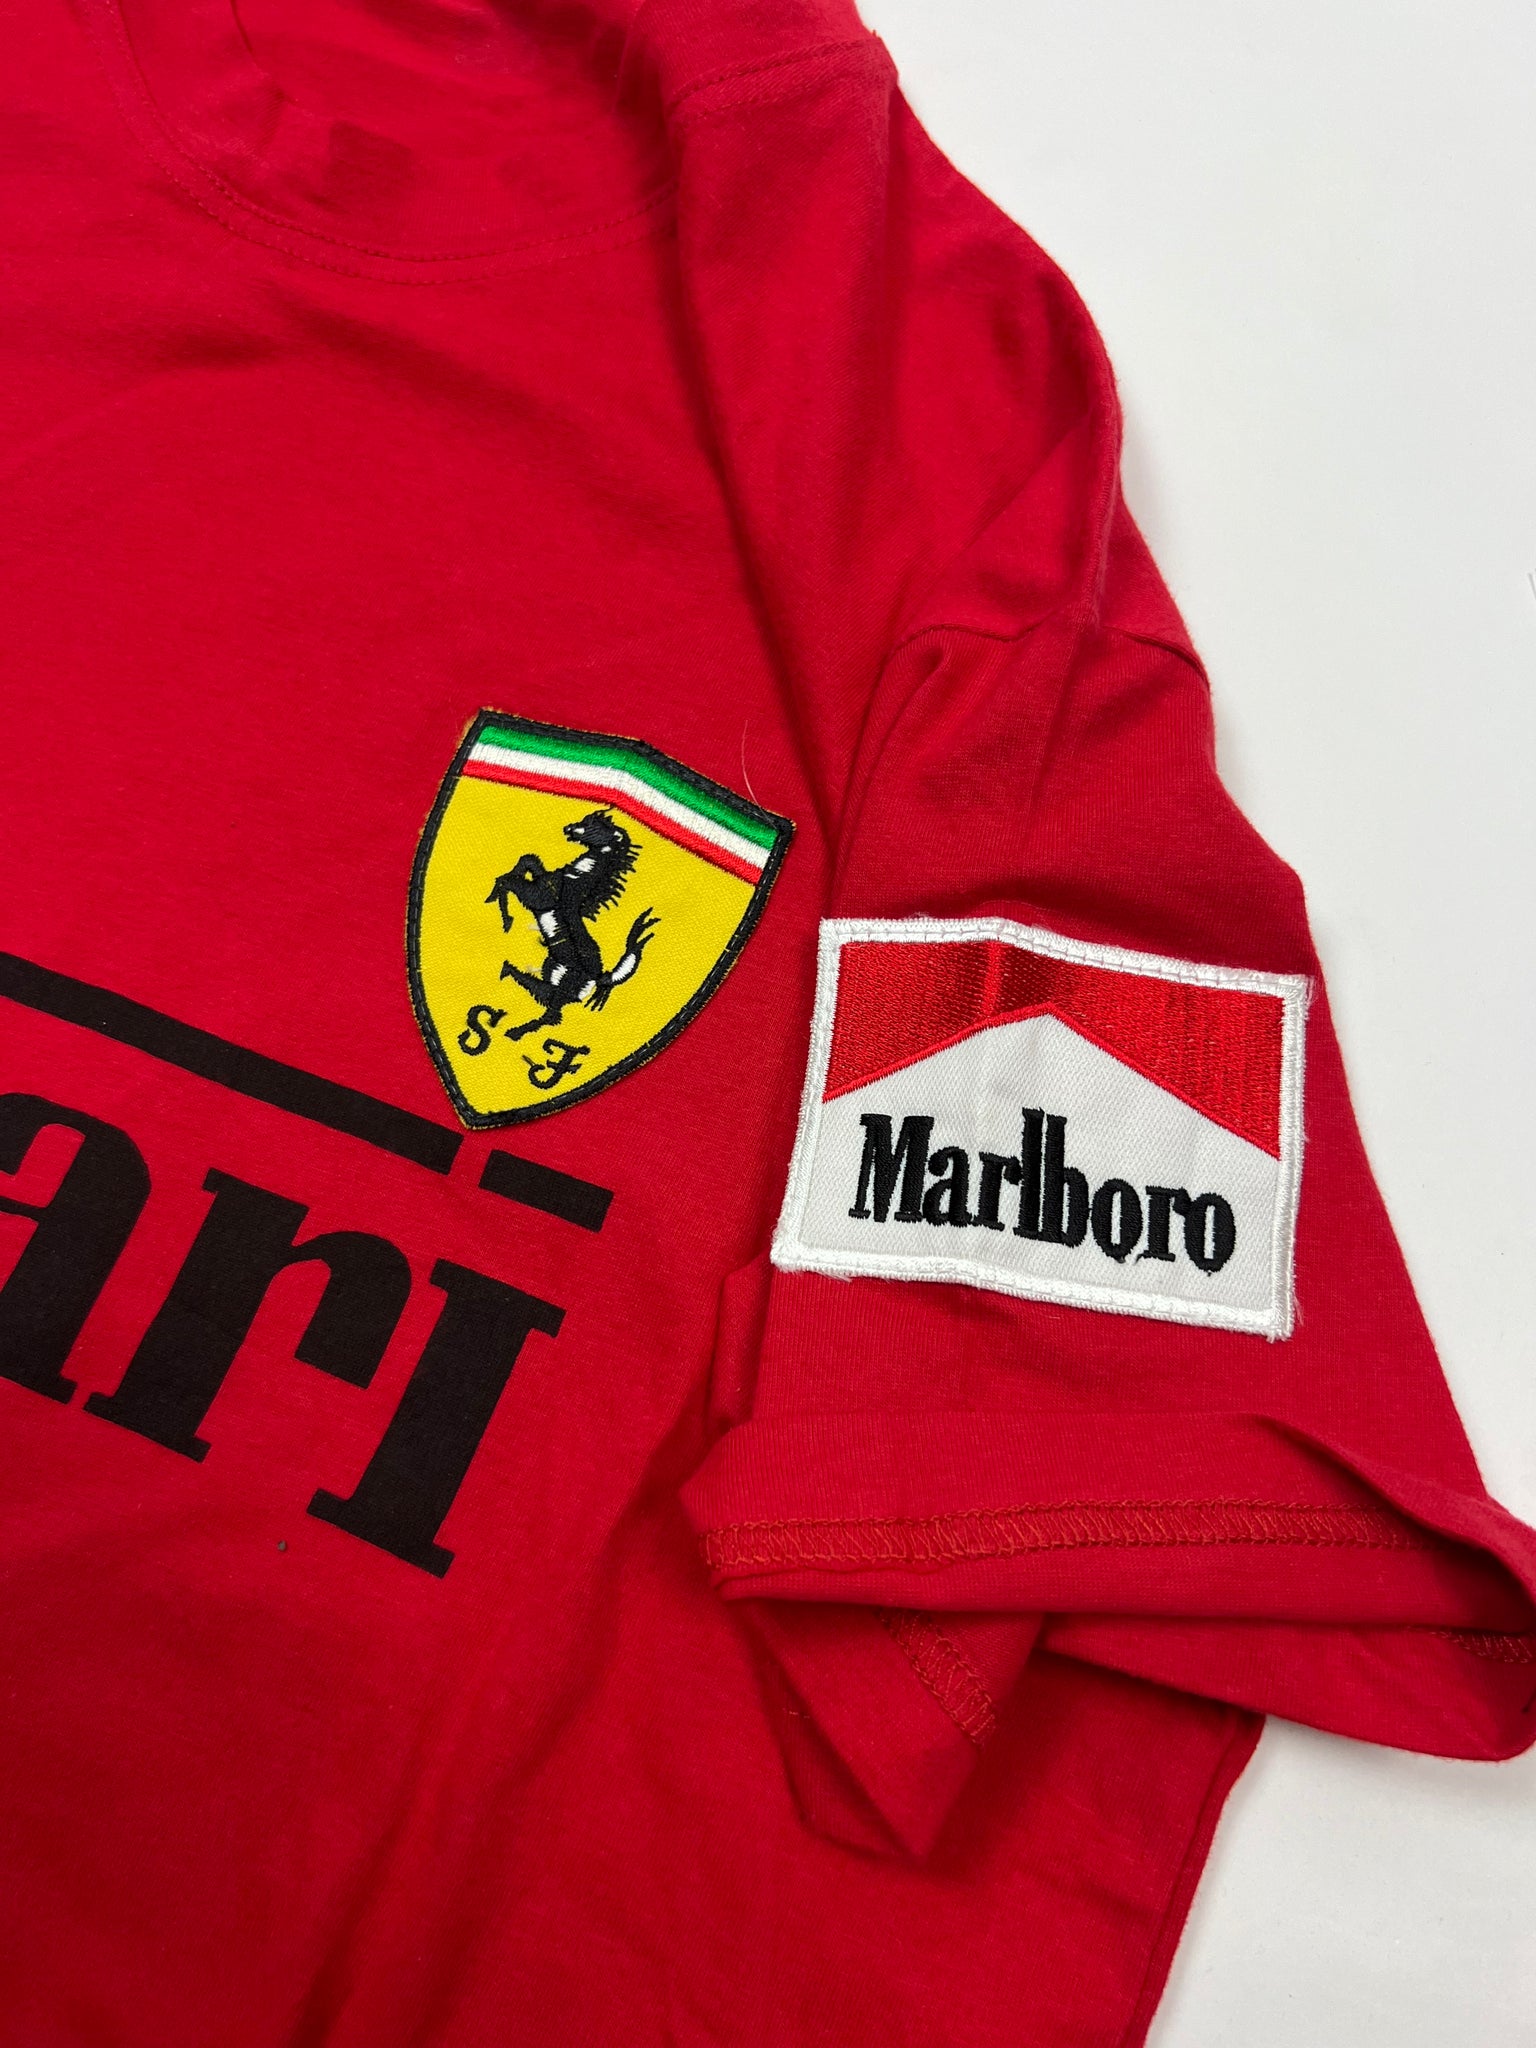 Ferrari T-Shirt (M)